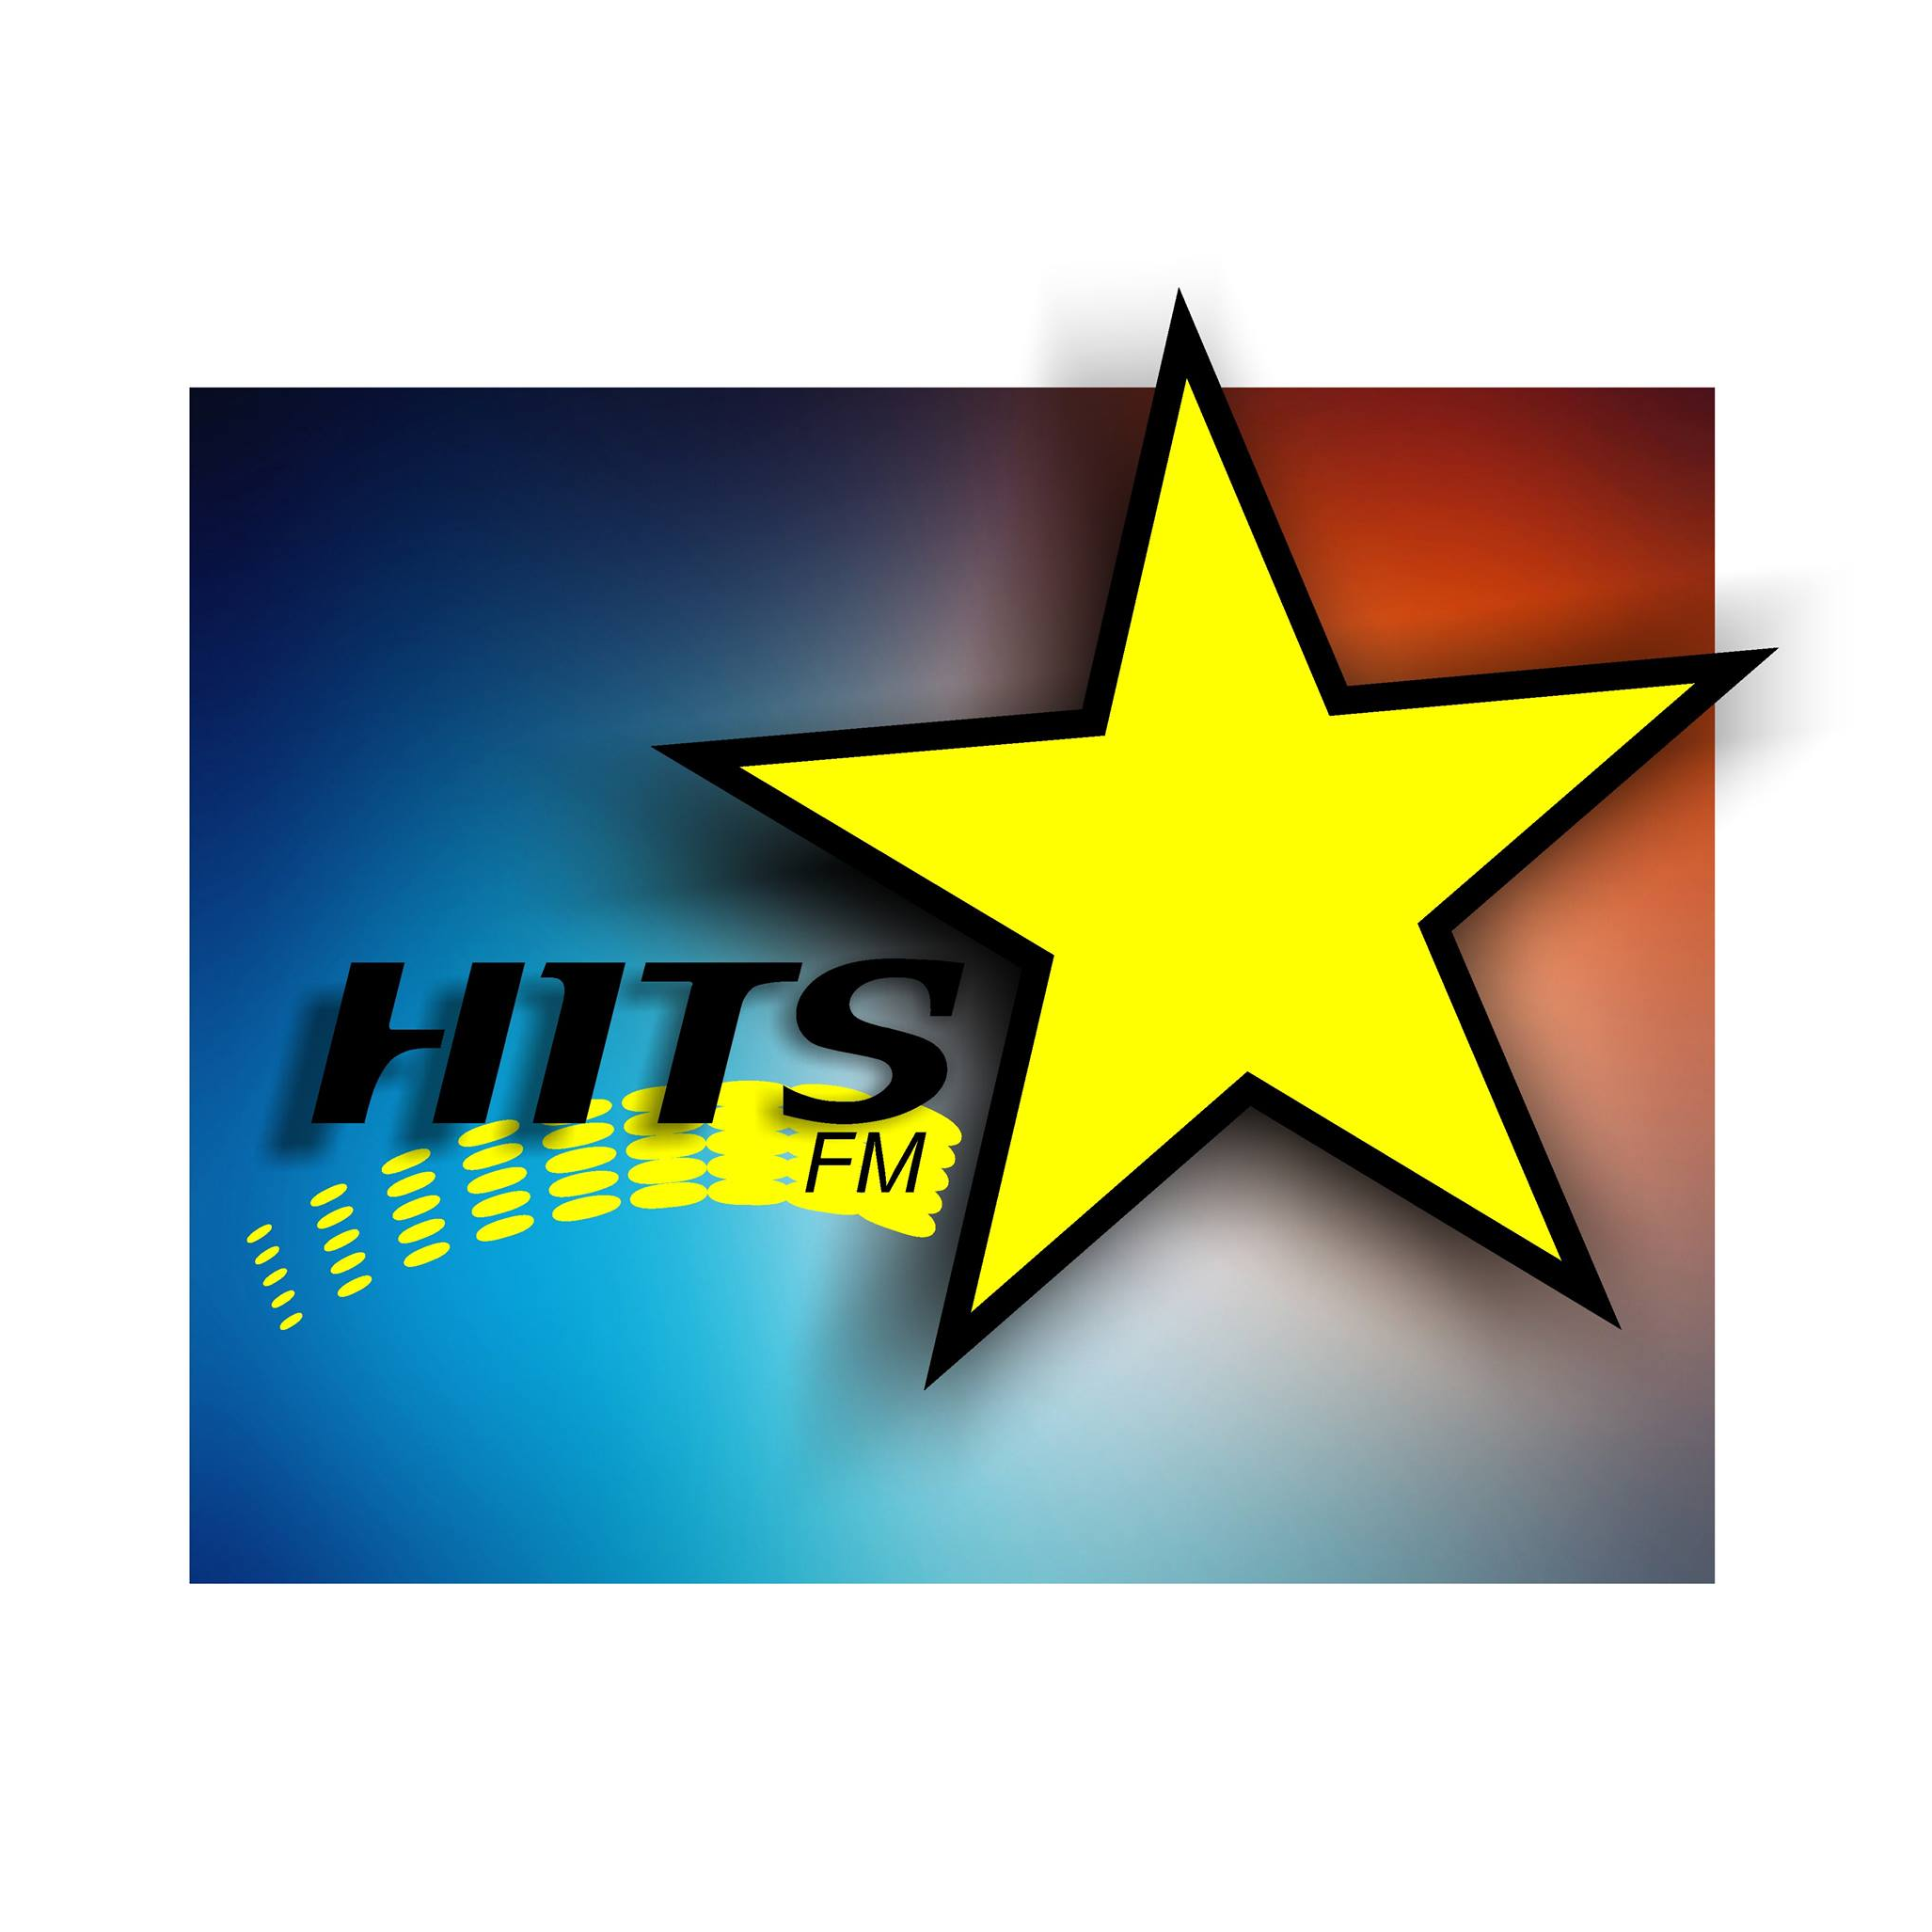 HitsFM